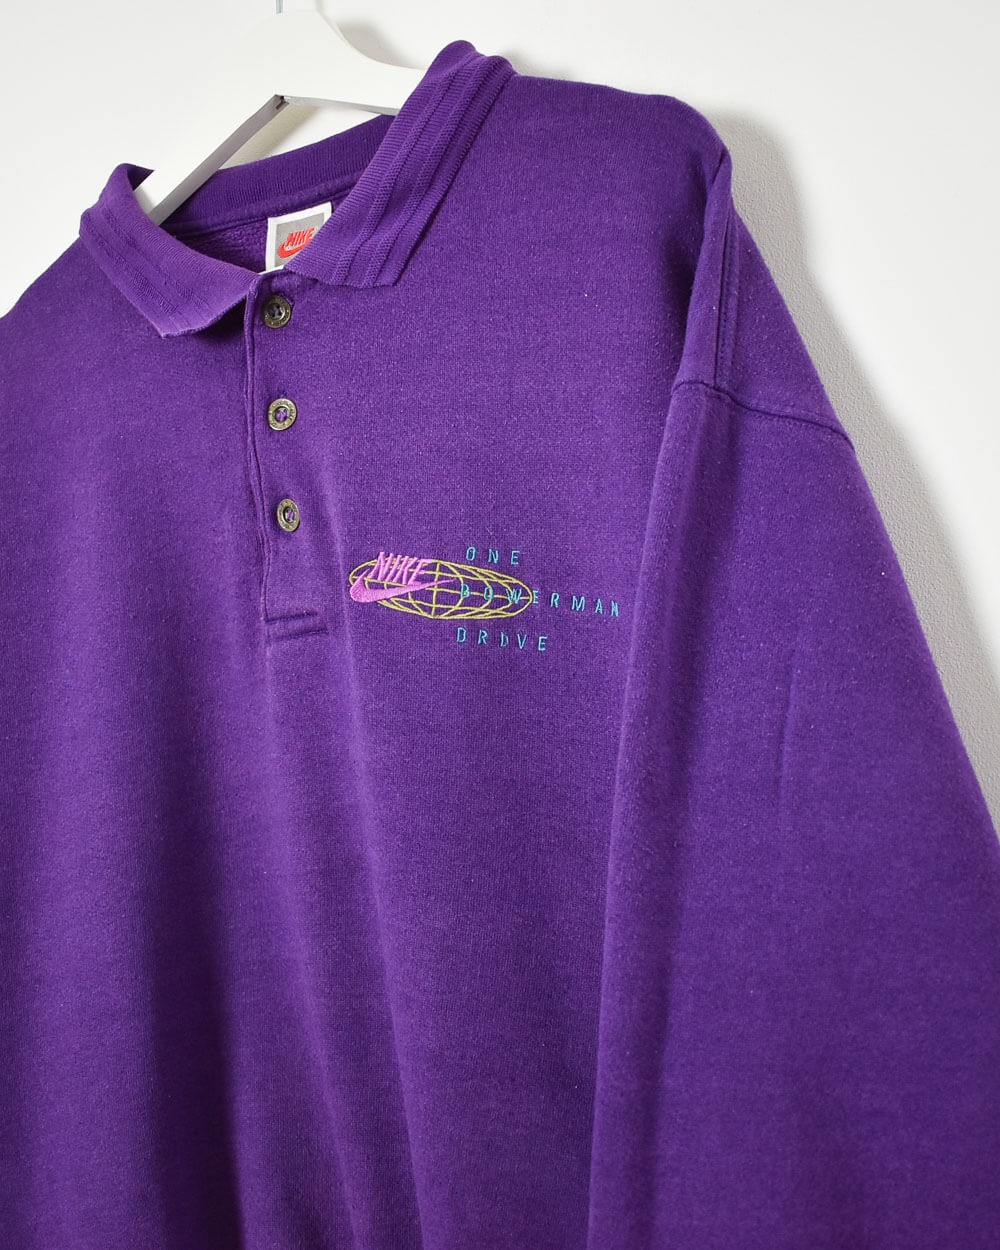 Purple Nike One Bowerman Drive Sweatshirt - Medium